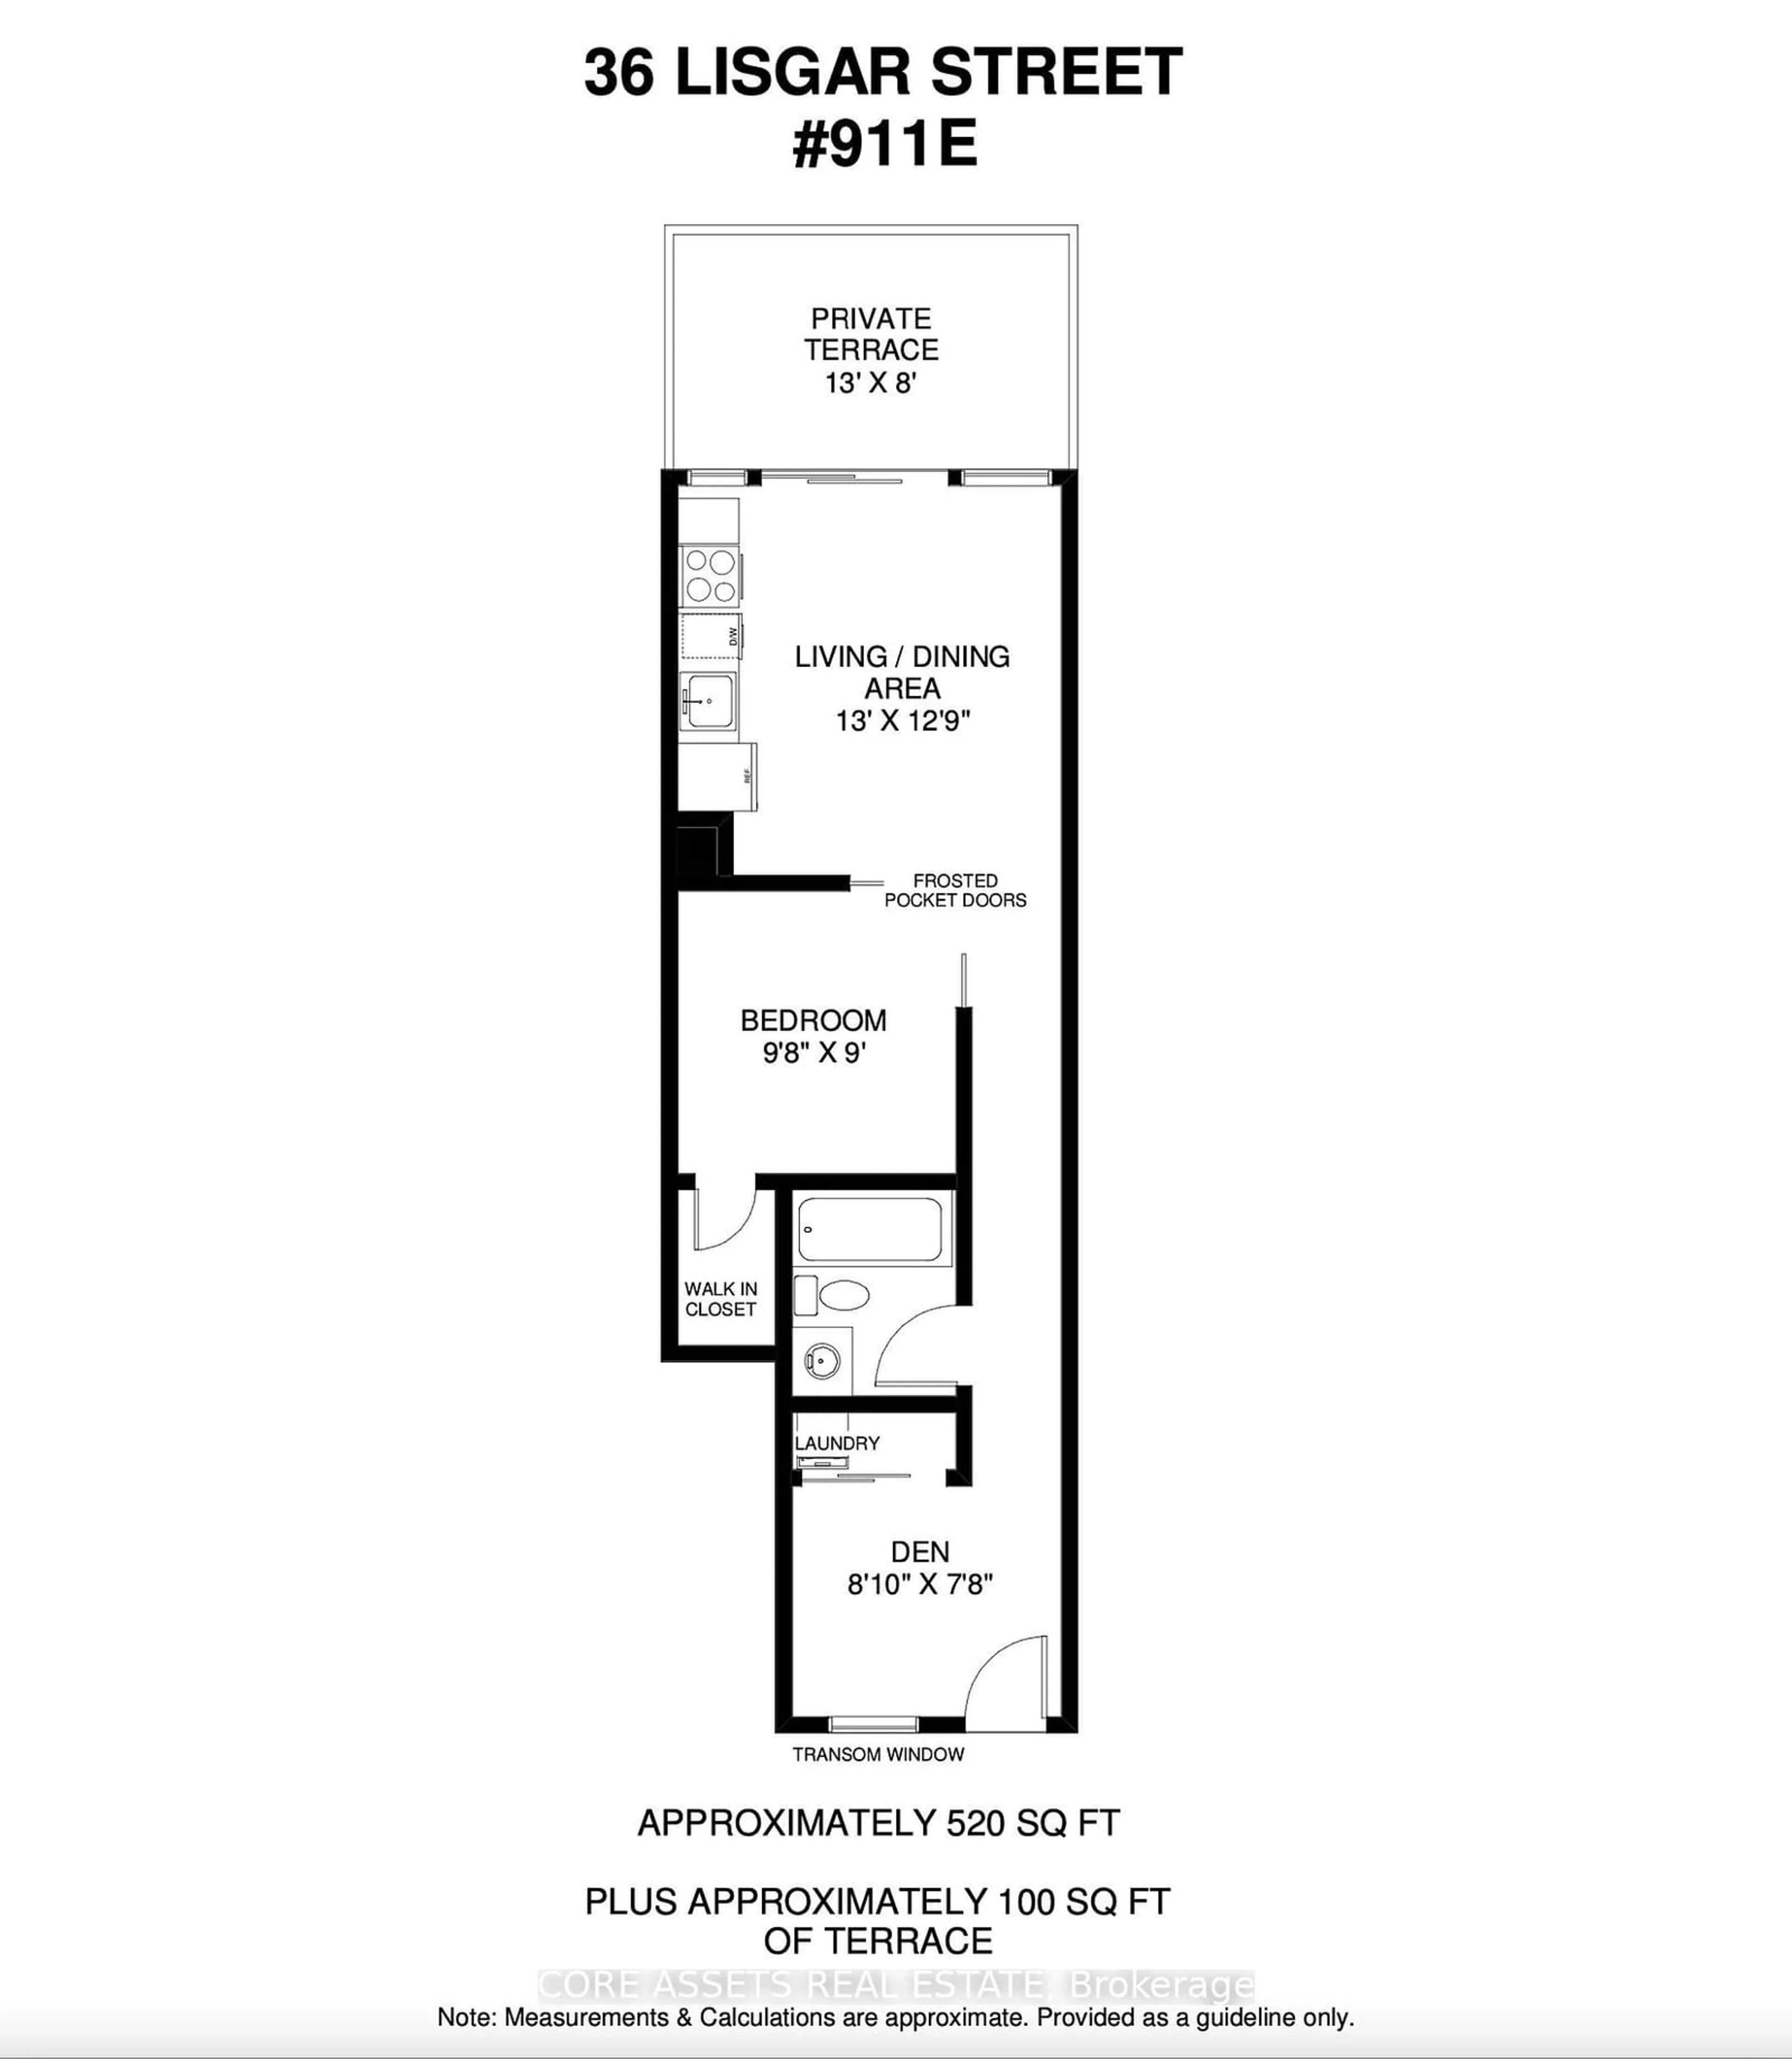 Floor plan for 36 Lisgar St #911E, Toronto Ontario M6J 0C7